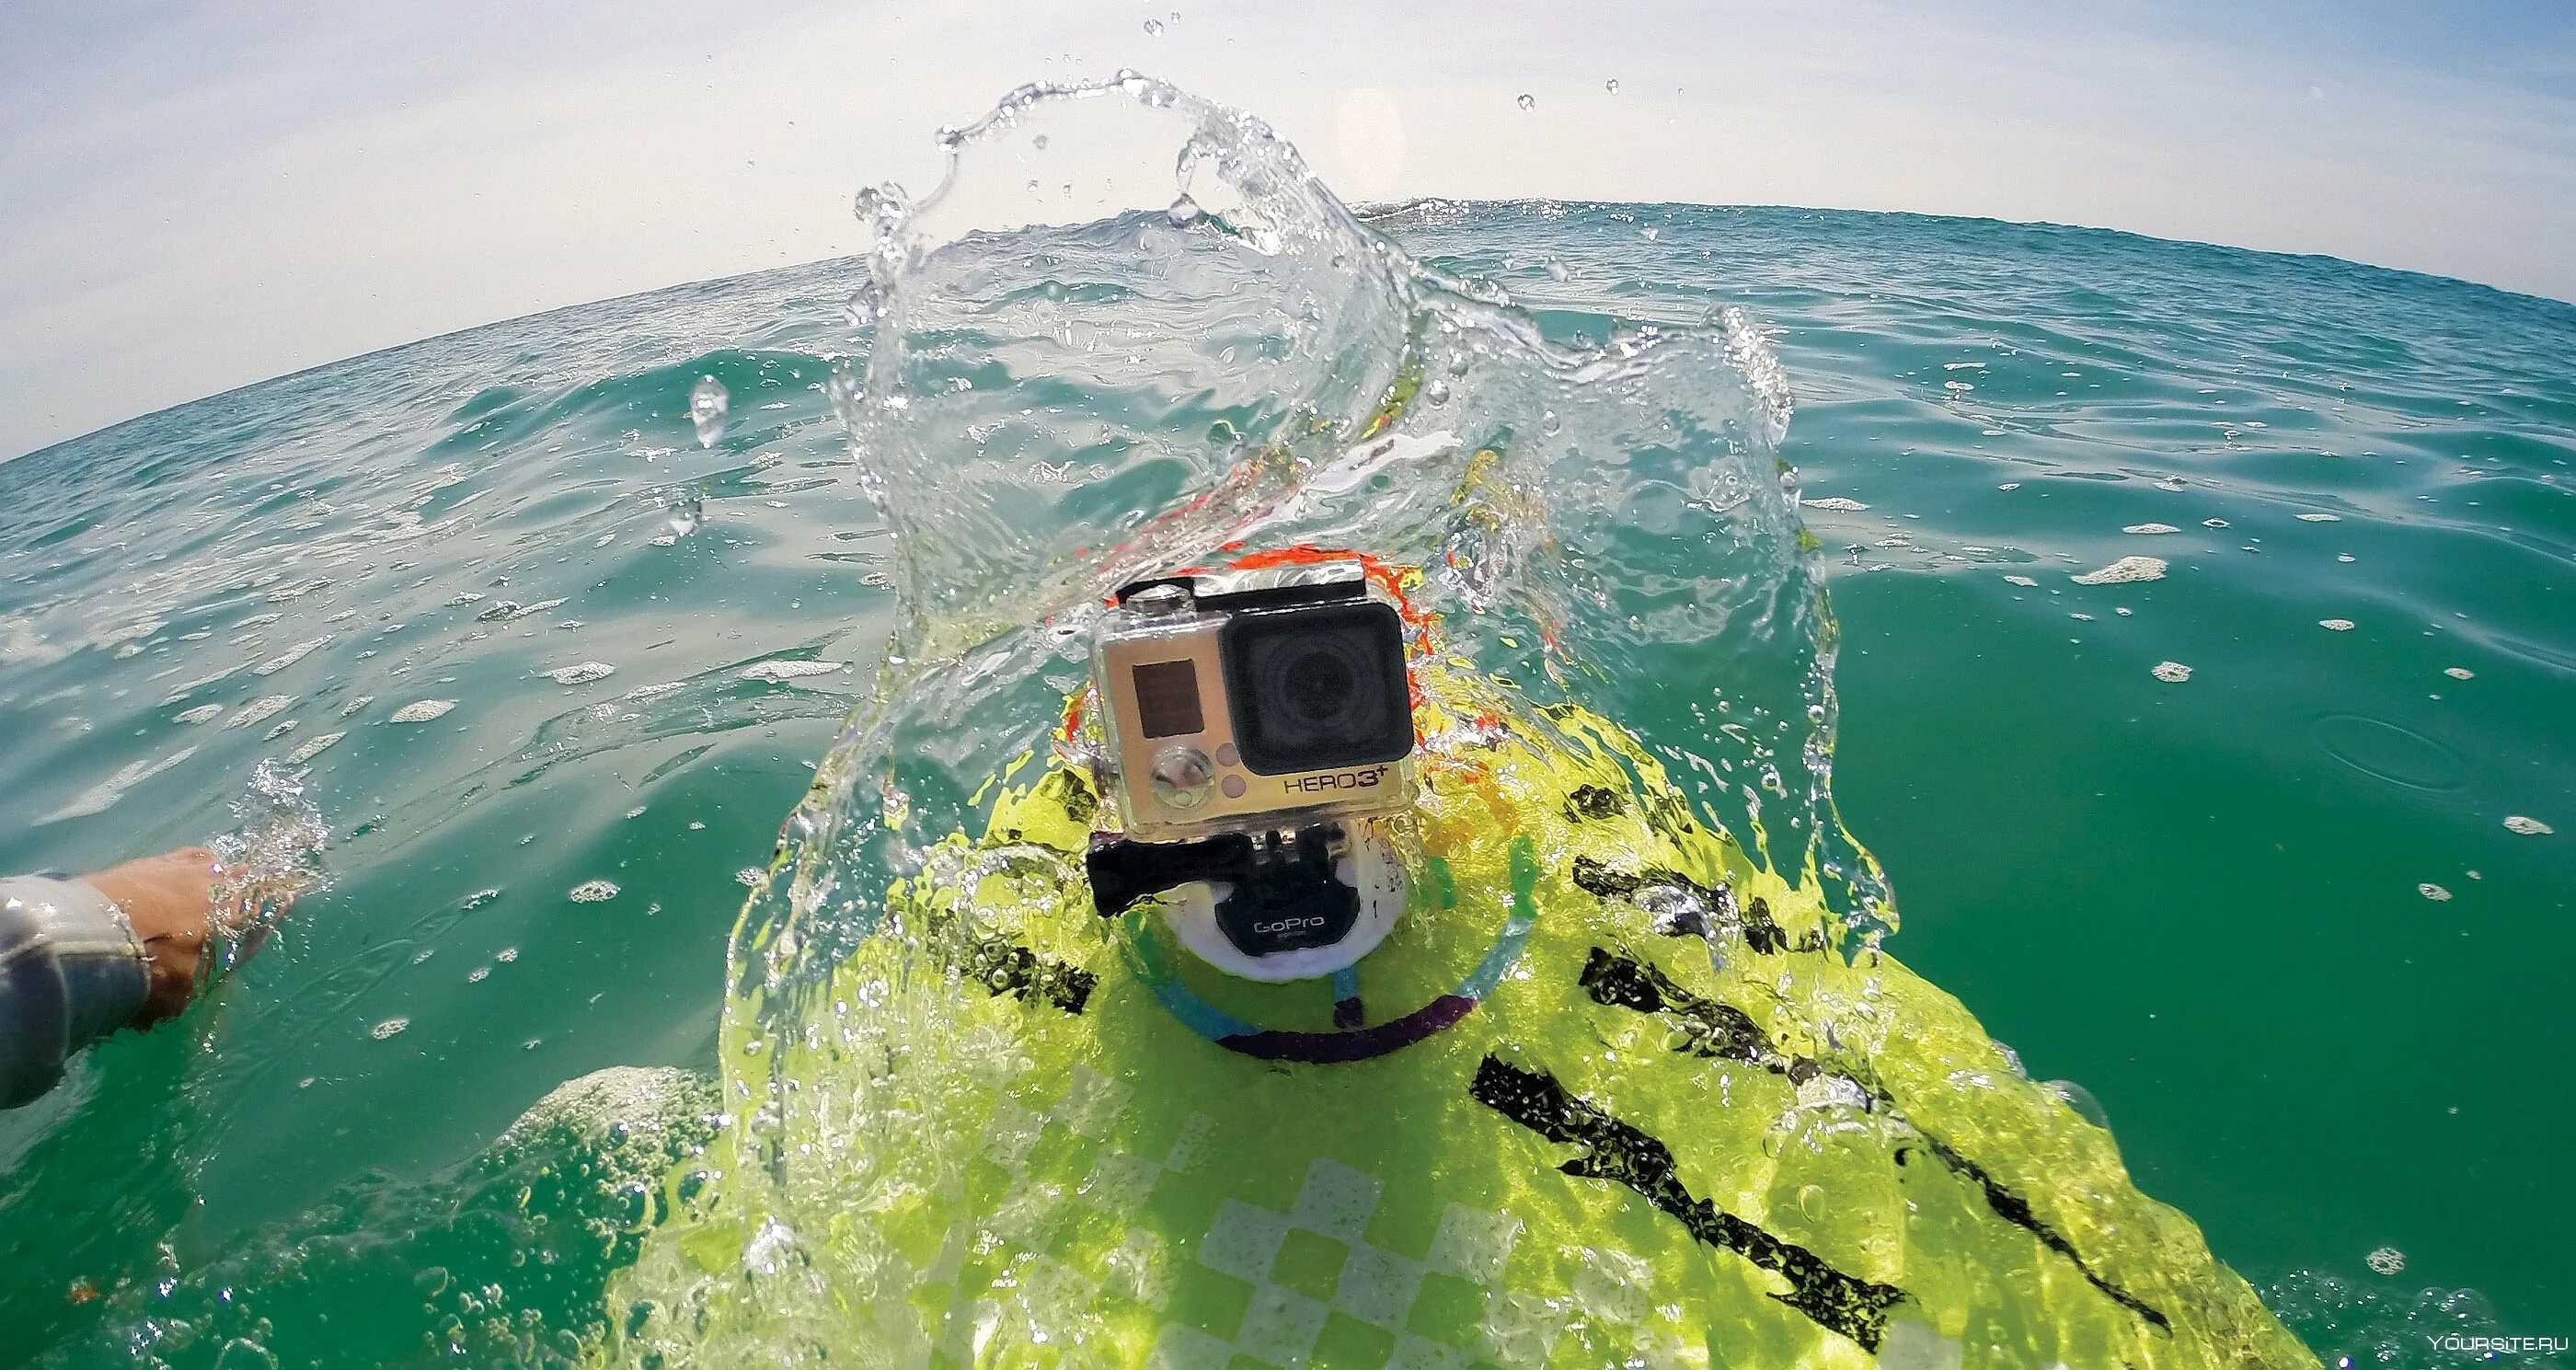 Го про в воде. GOPRO крепление на штанге ABBRD-001 (Bodyboard Mount). Экшн камера GOPRO 8. Экшн камера Сигма. Камера гоу про под водой.